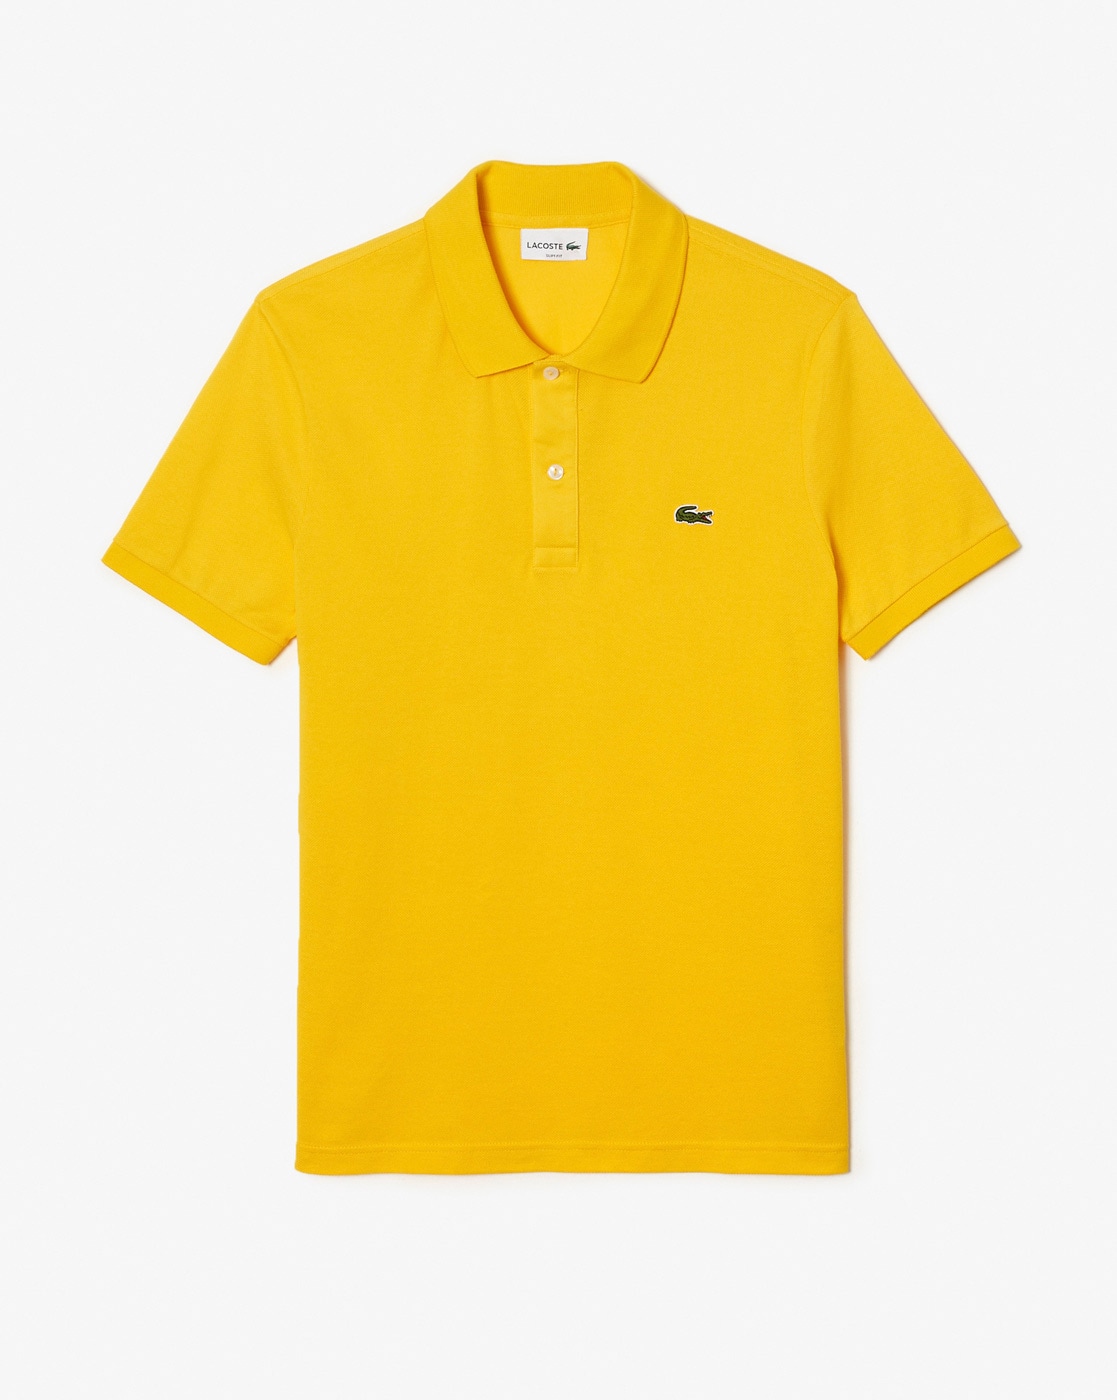 Buy Yellow Tshirts for Lacoste Online Ajio.com